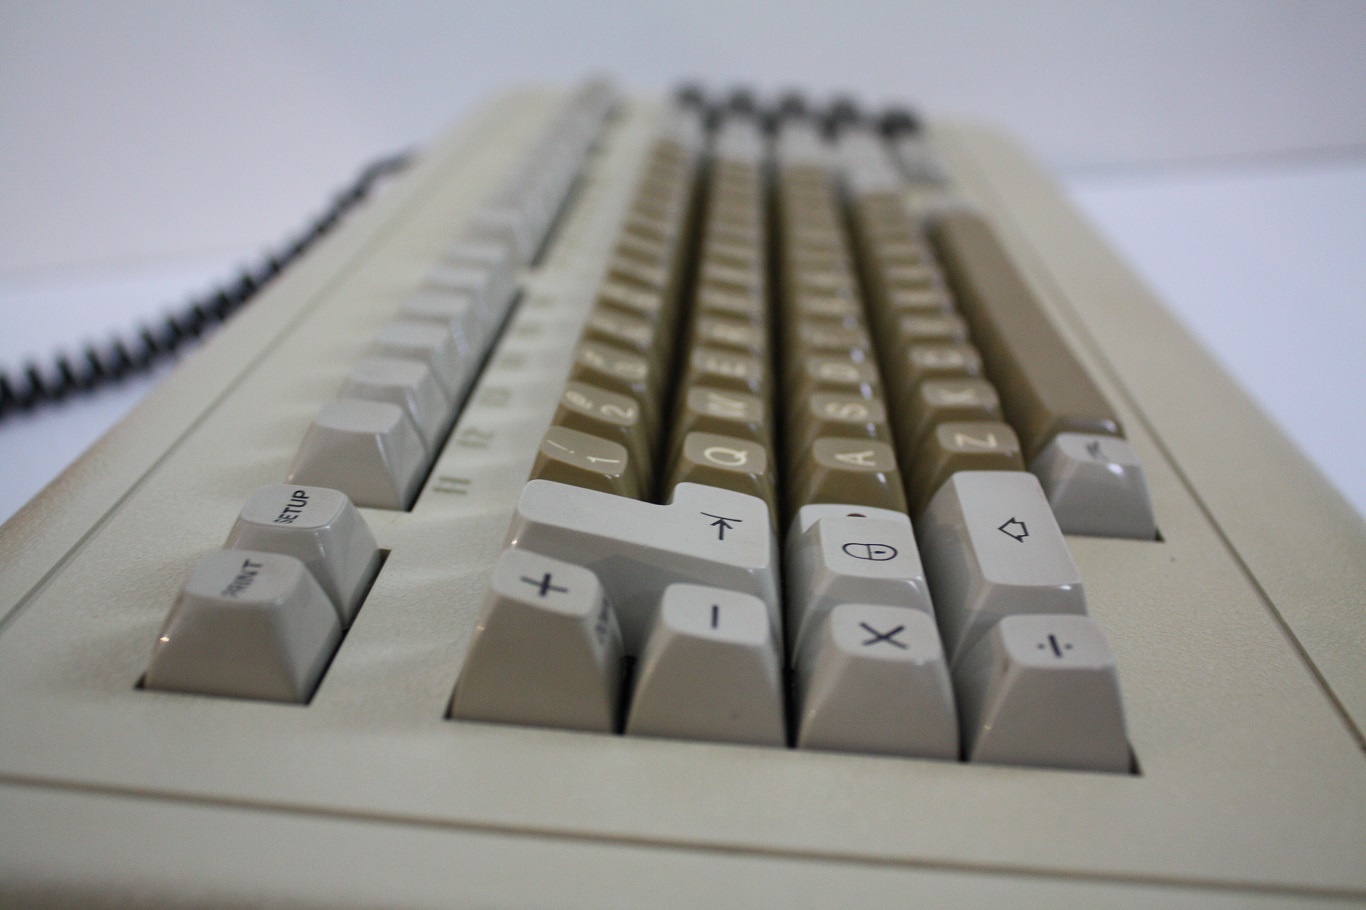 Cherry Terminal Keyboard - Profile 2